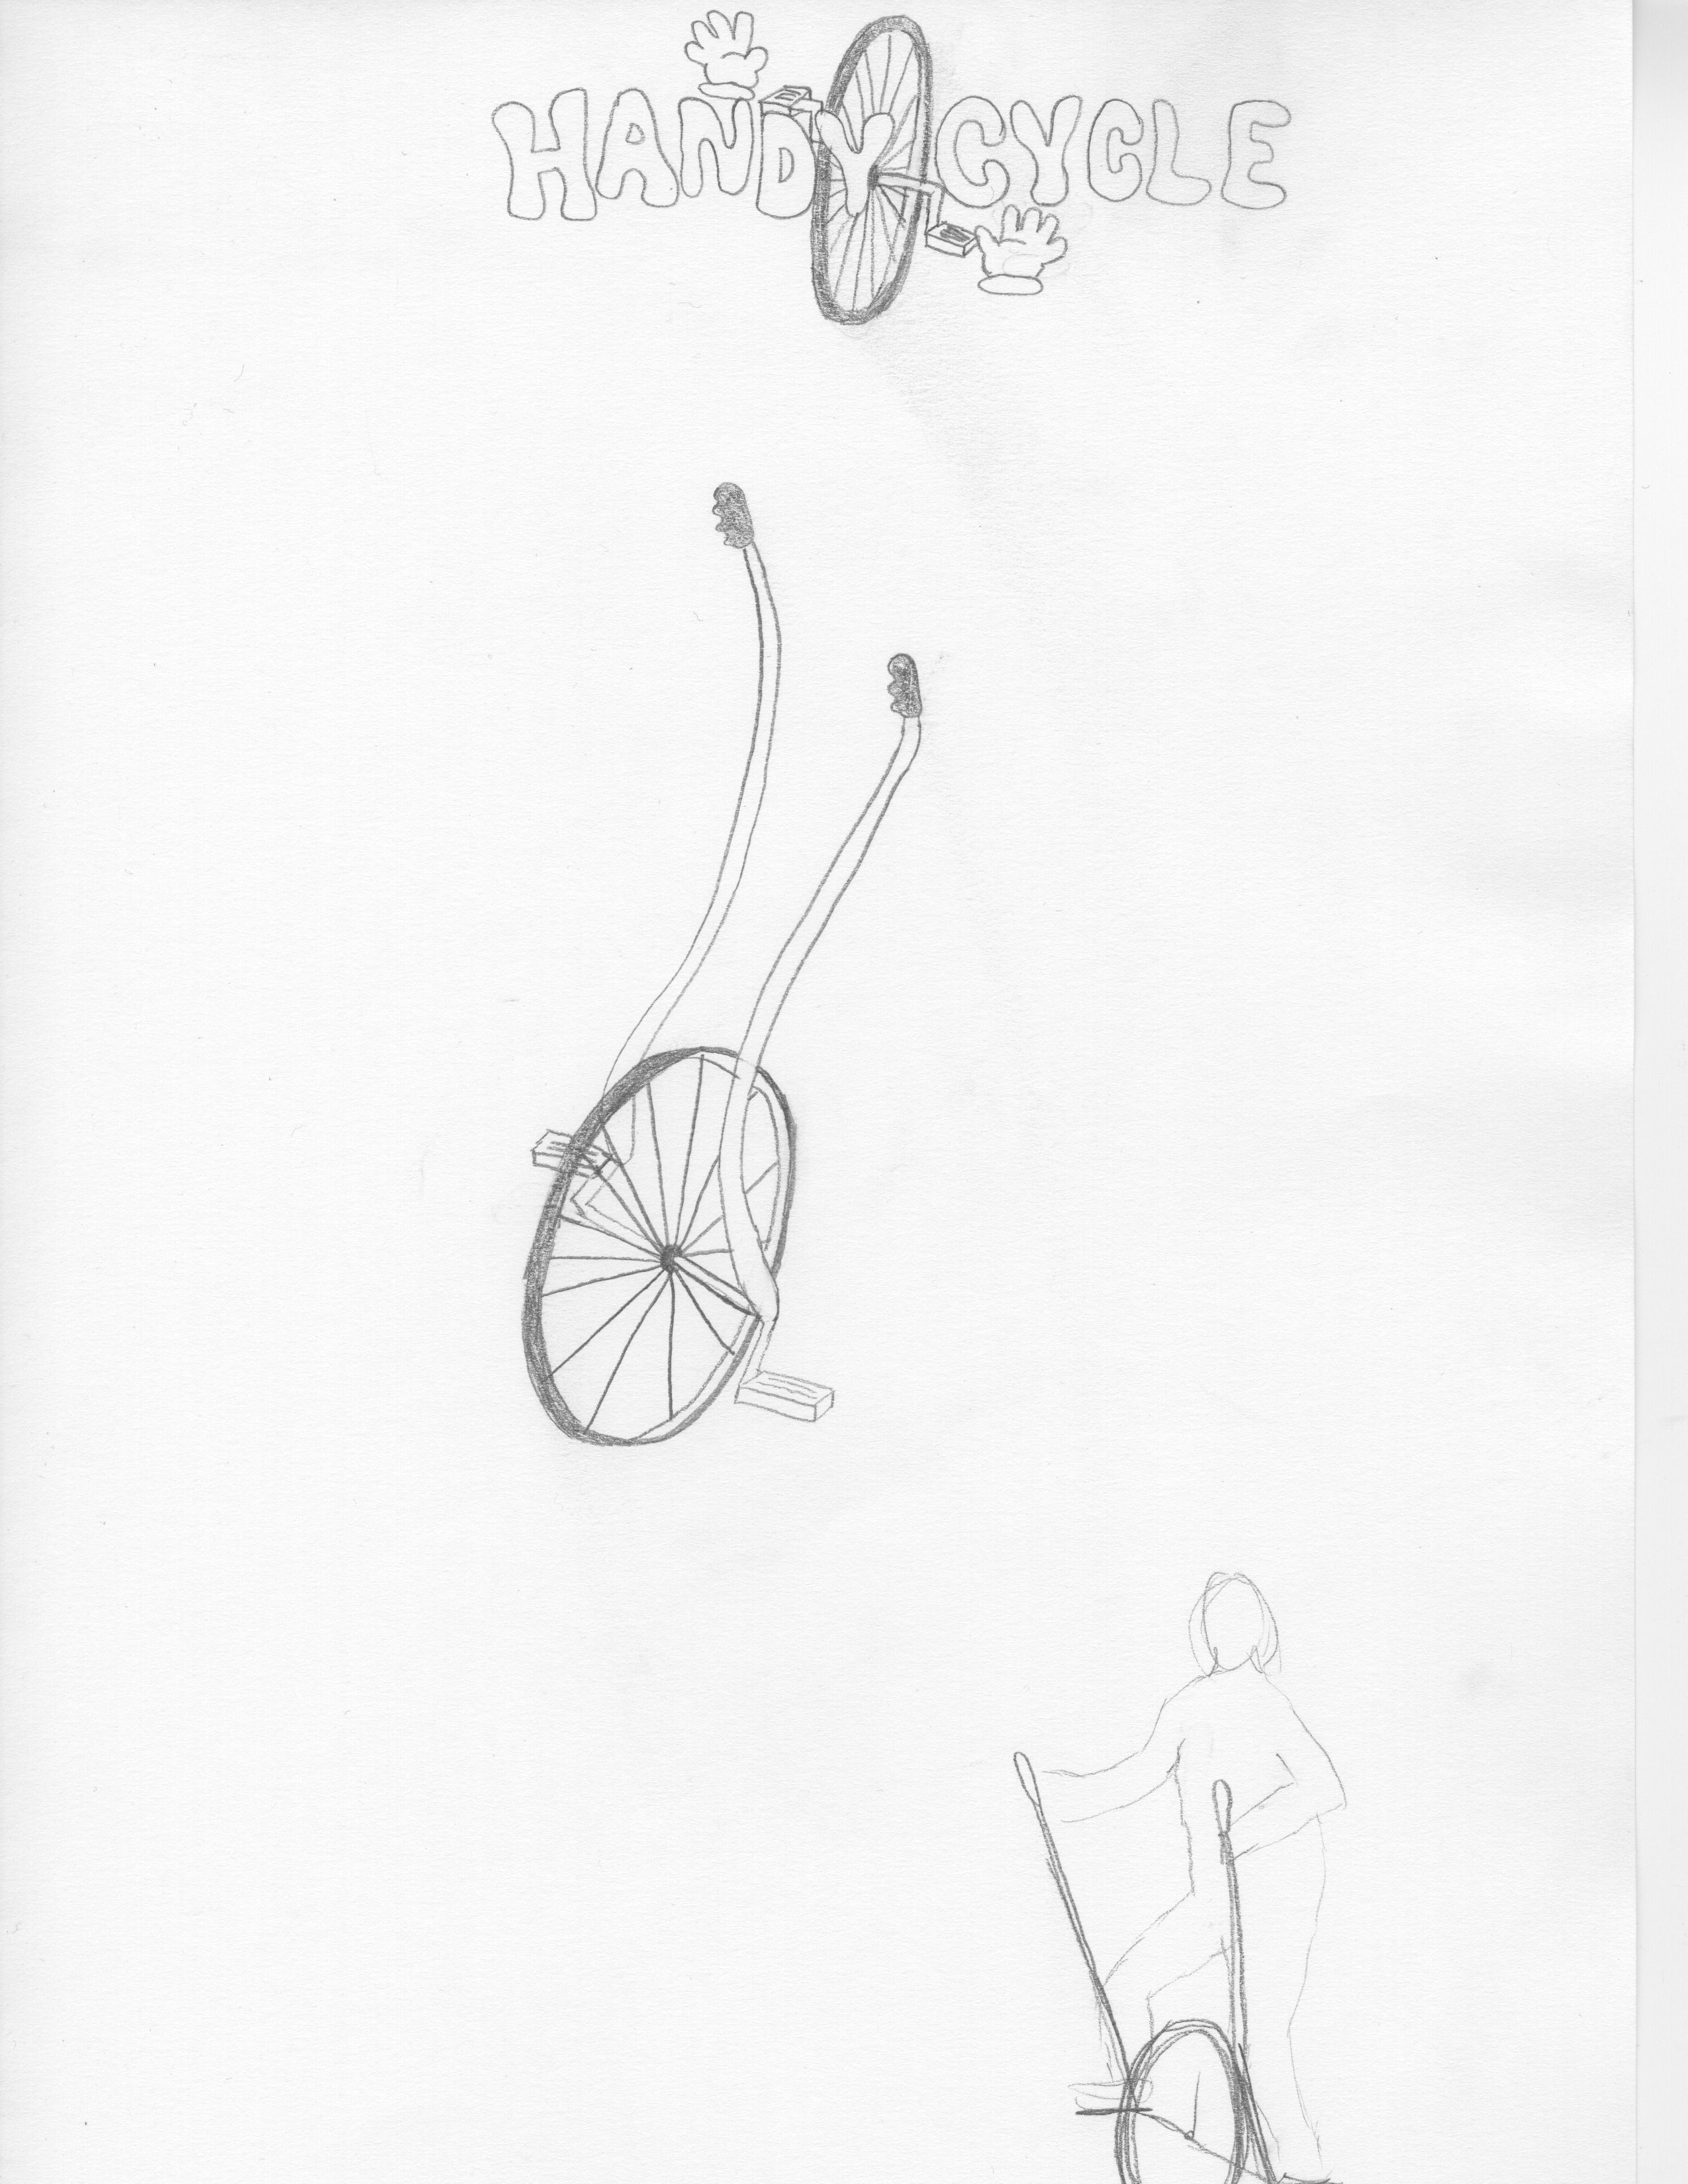 Handycycle